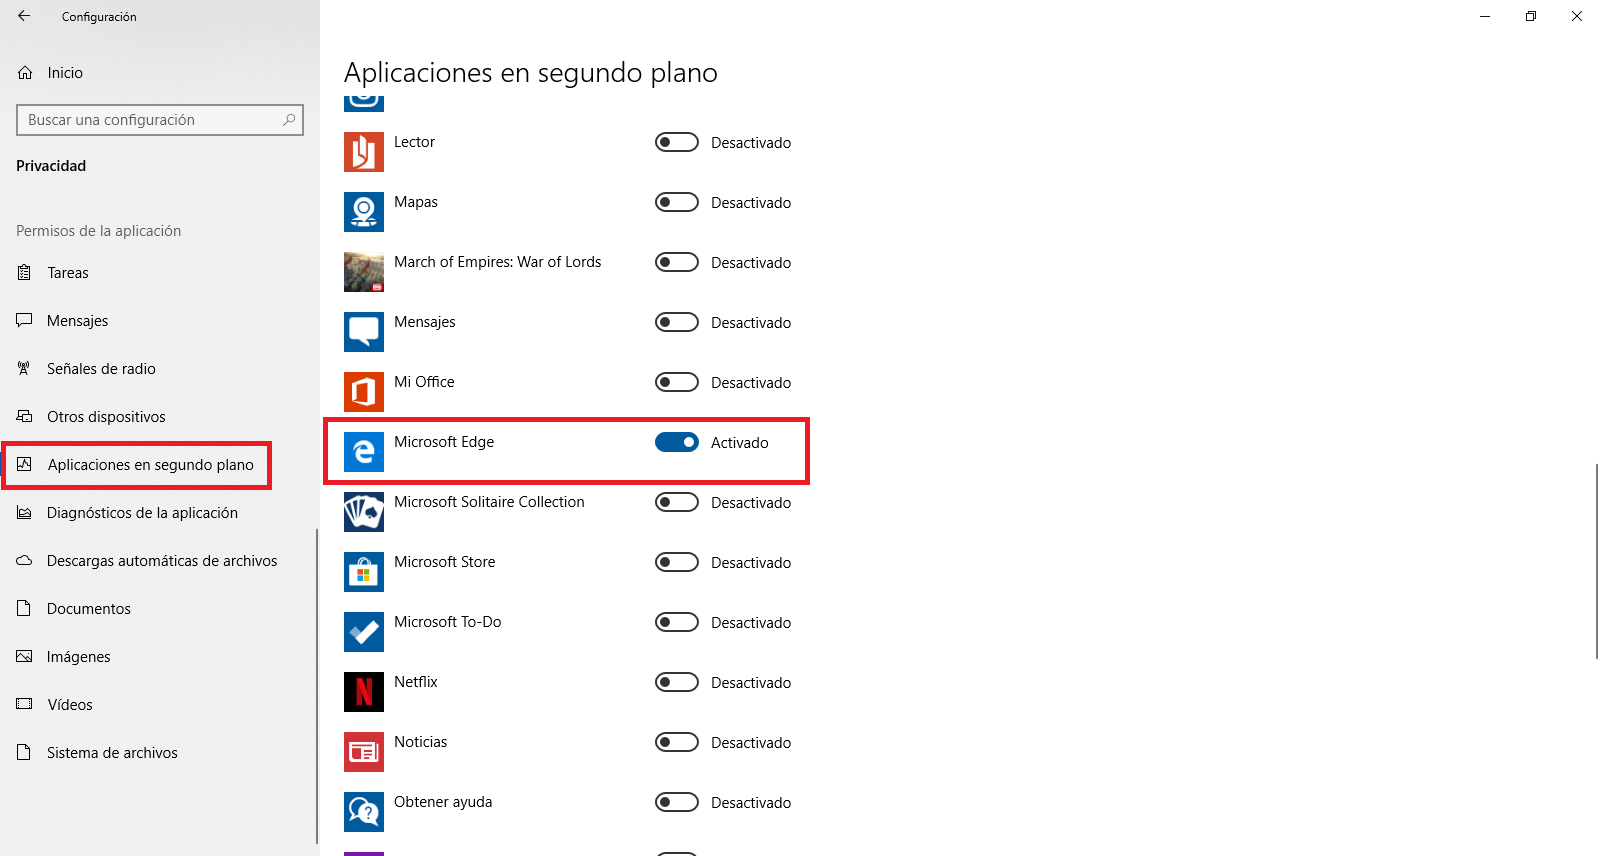 el navegador Edge se silencia al minimizar la ventana en windows 10